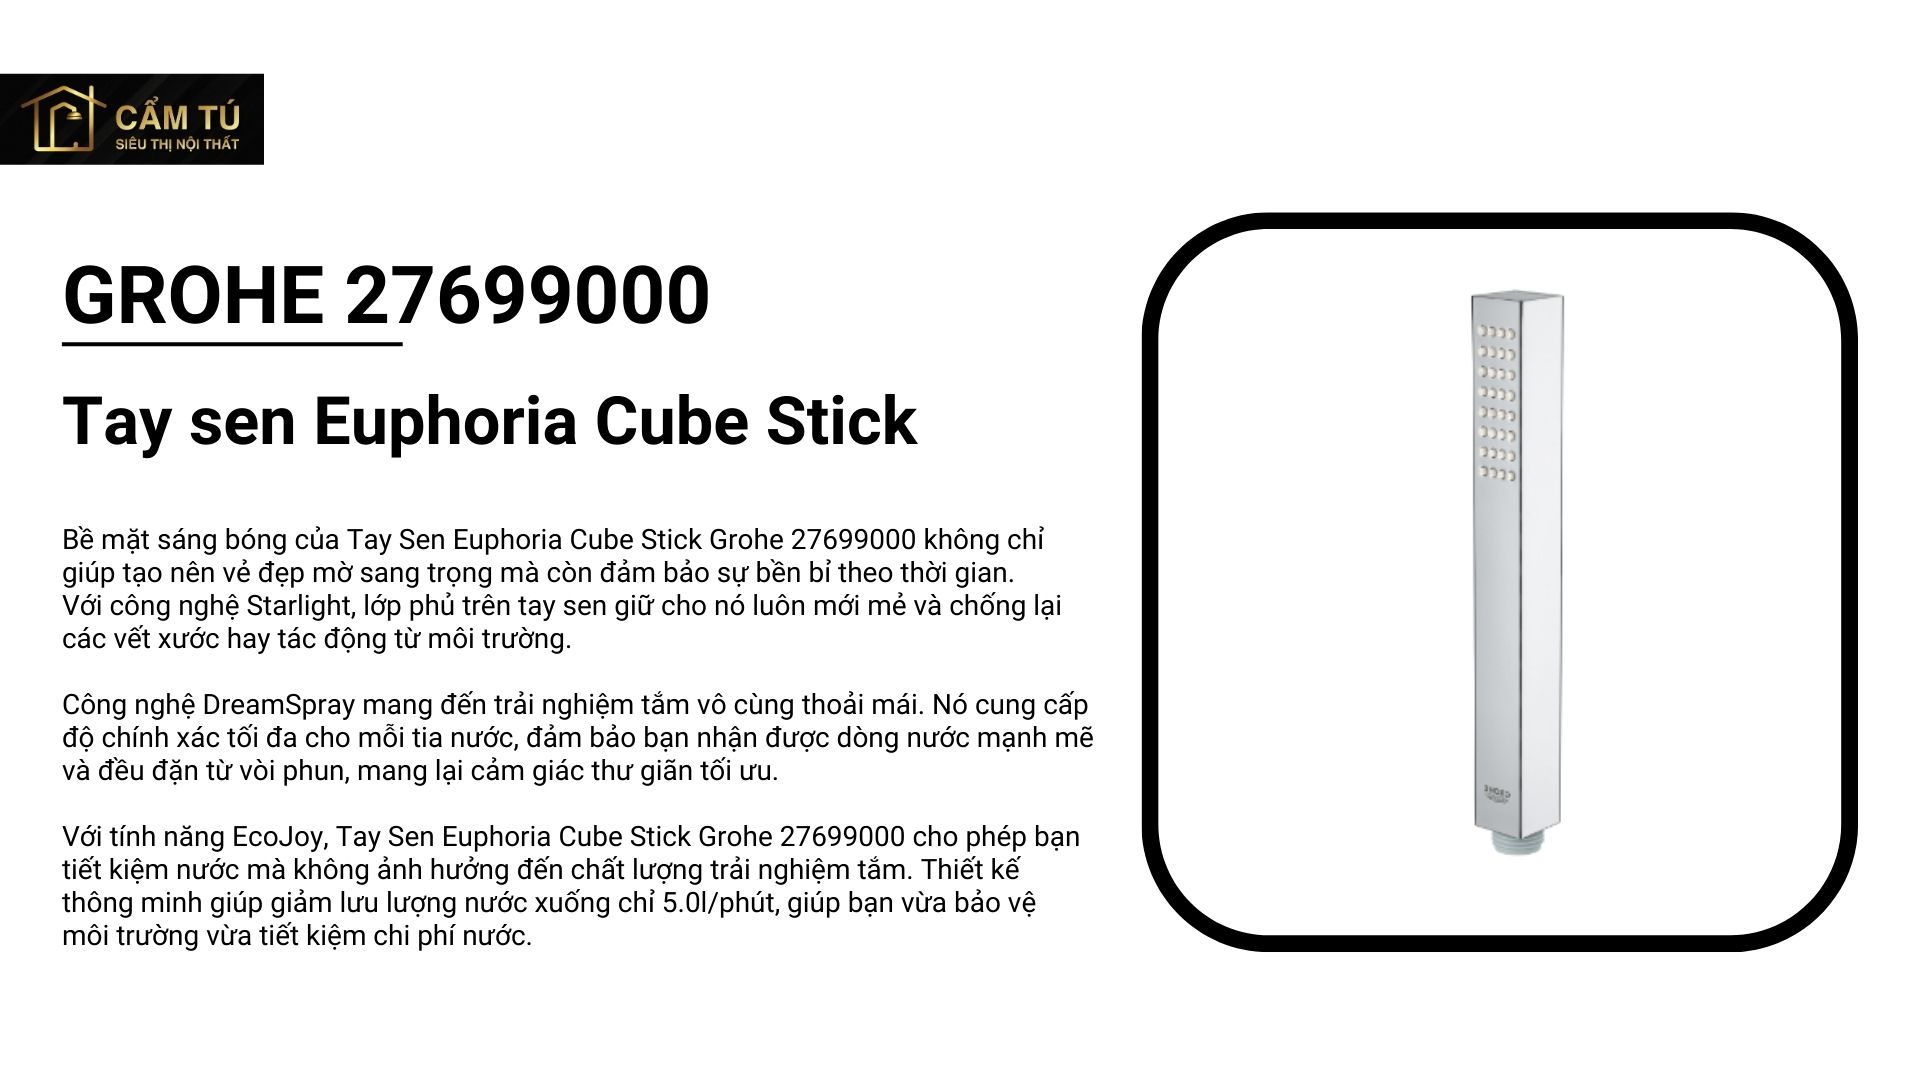 Tay sen Euphoria Cube stick Grohe 27699000